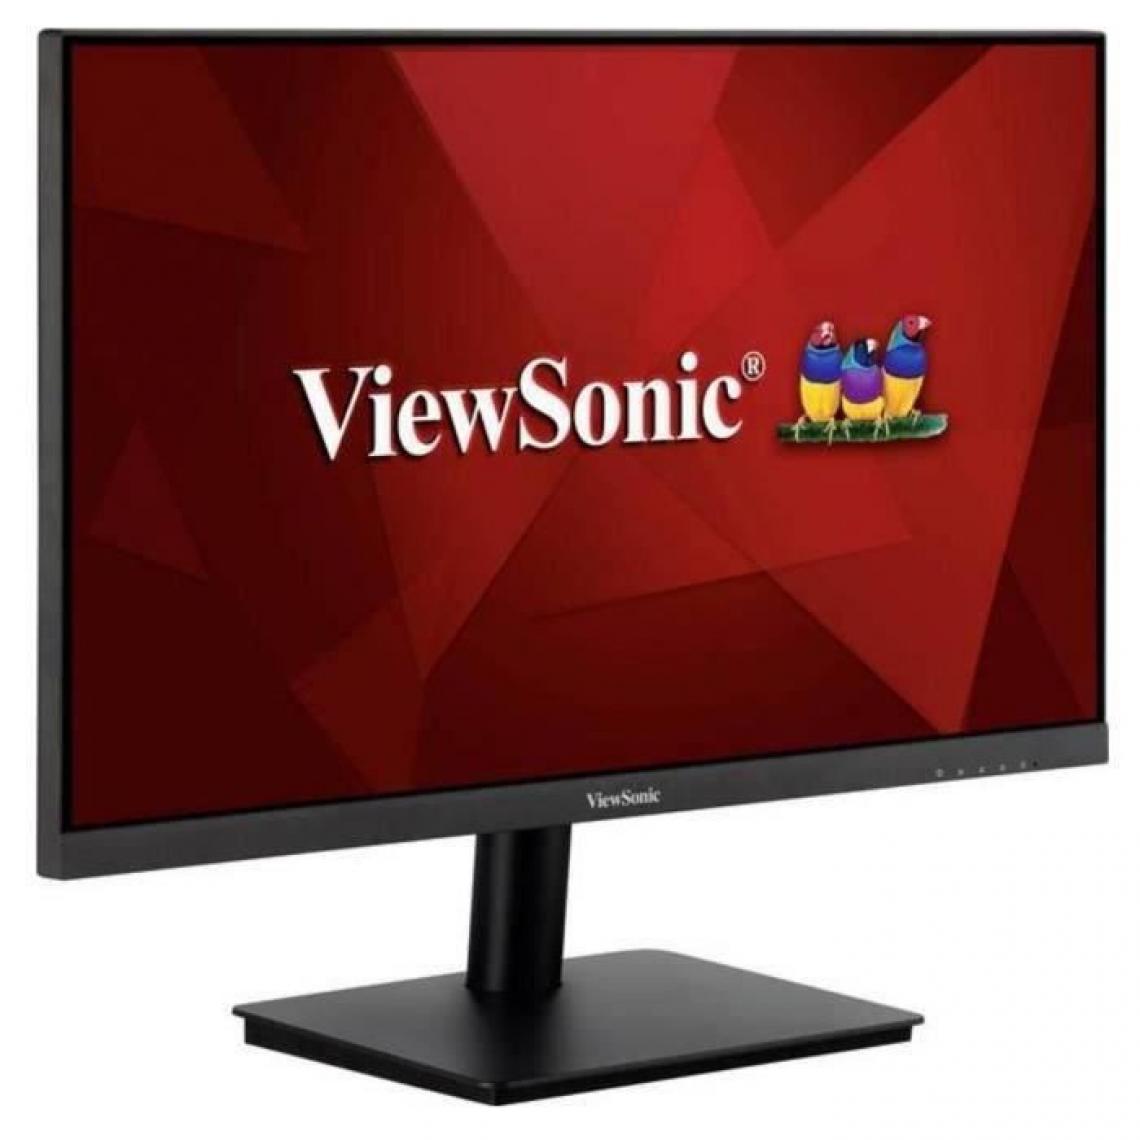 Viewsonic - Ecran PC - VIEWSONIC - VA2406-h - 24 FHD - Dalle VA - 4 MS - 1xHDMI, 1xVGA - - Moniteur PC